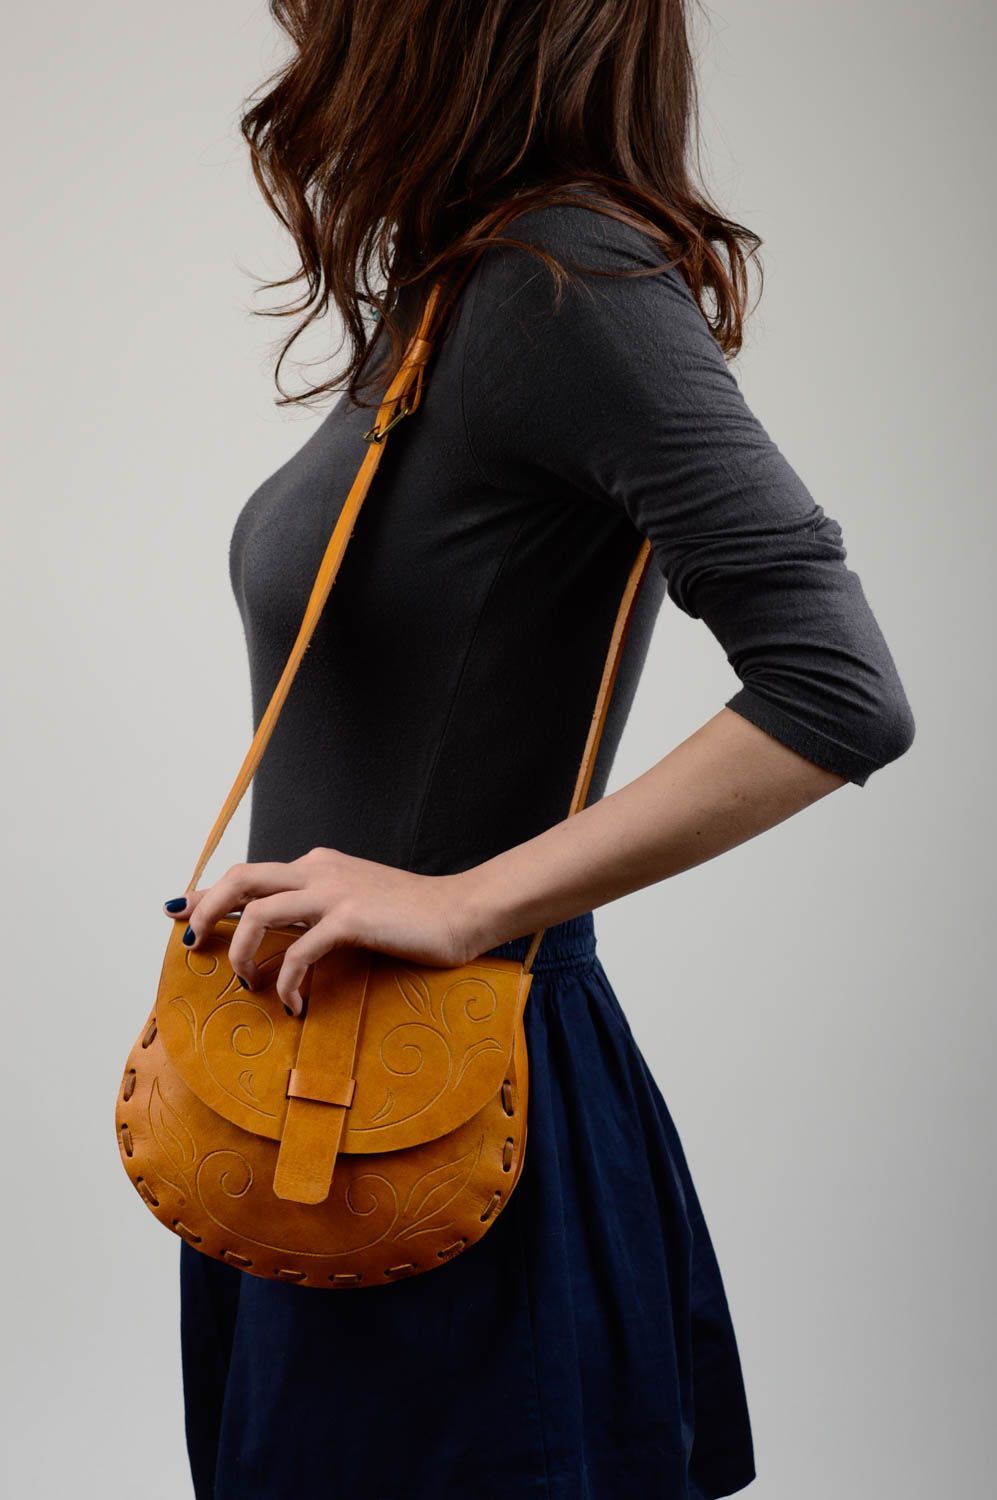 Damen Umhängetasche handgefertigte Damentasche Leder stilvolles Mode Accessoire foto 2